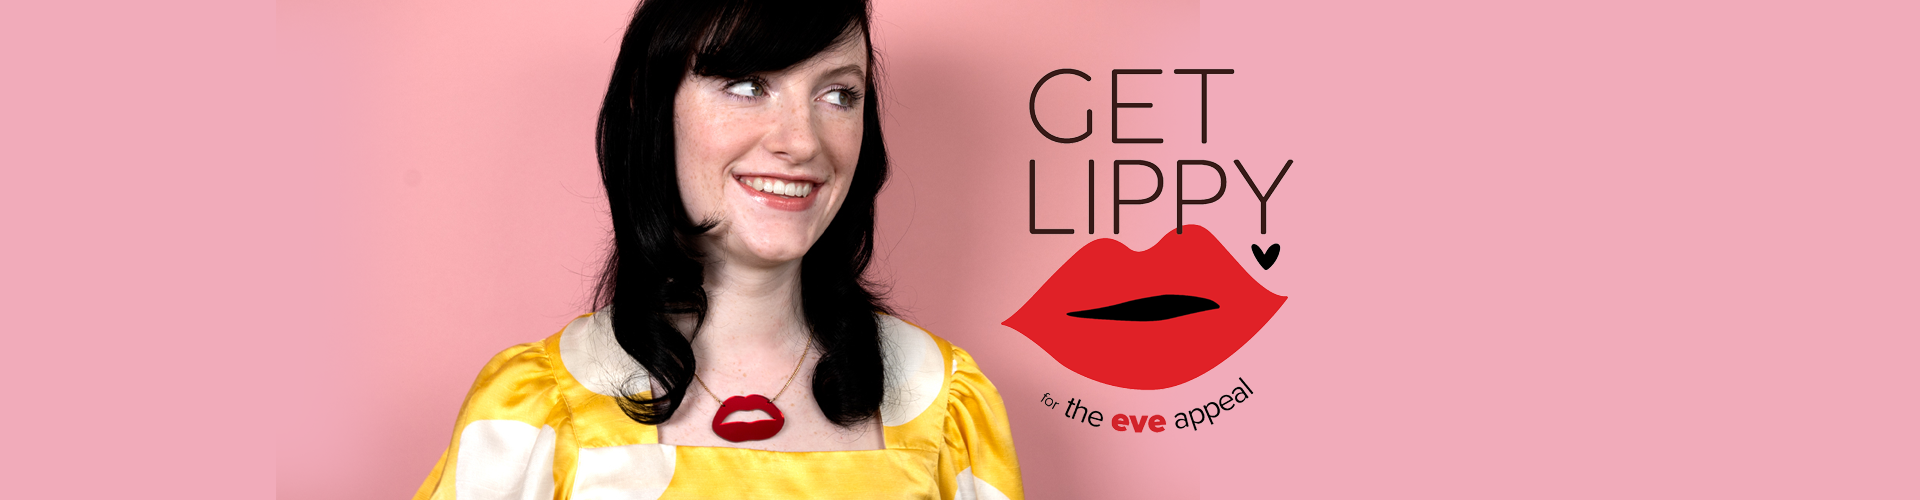 Get Lippy!